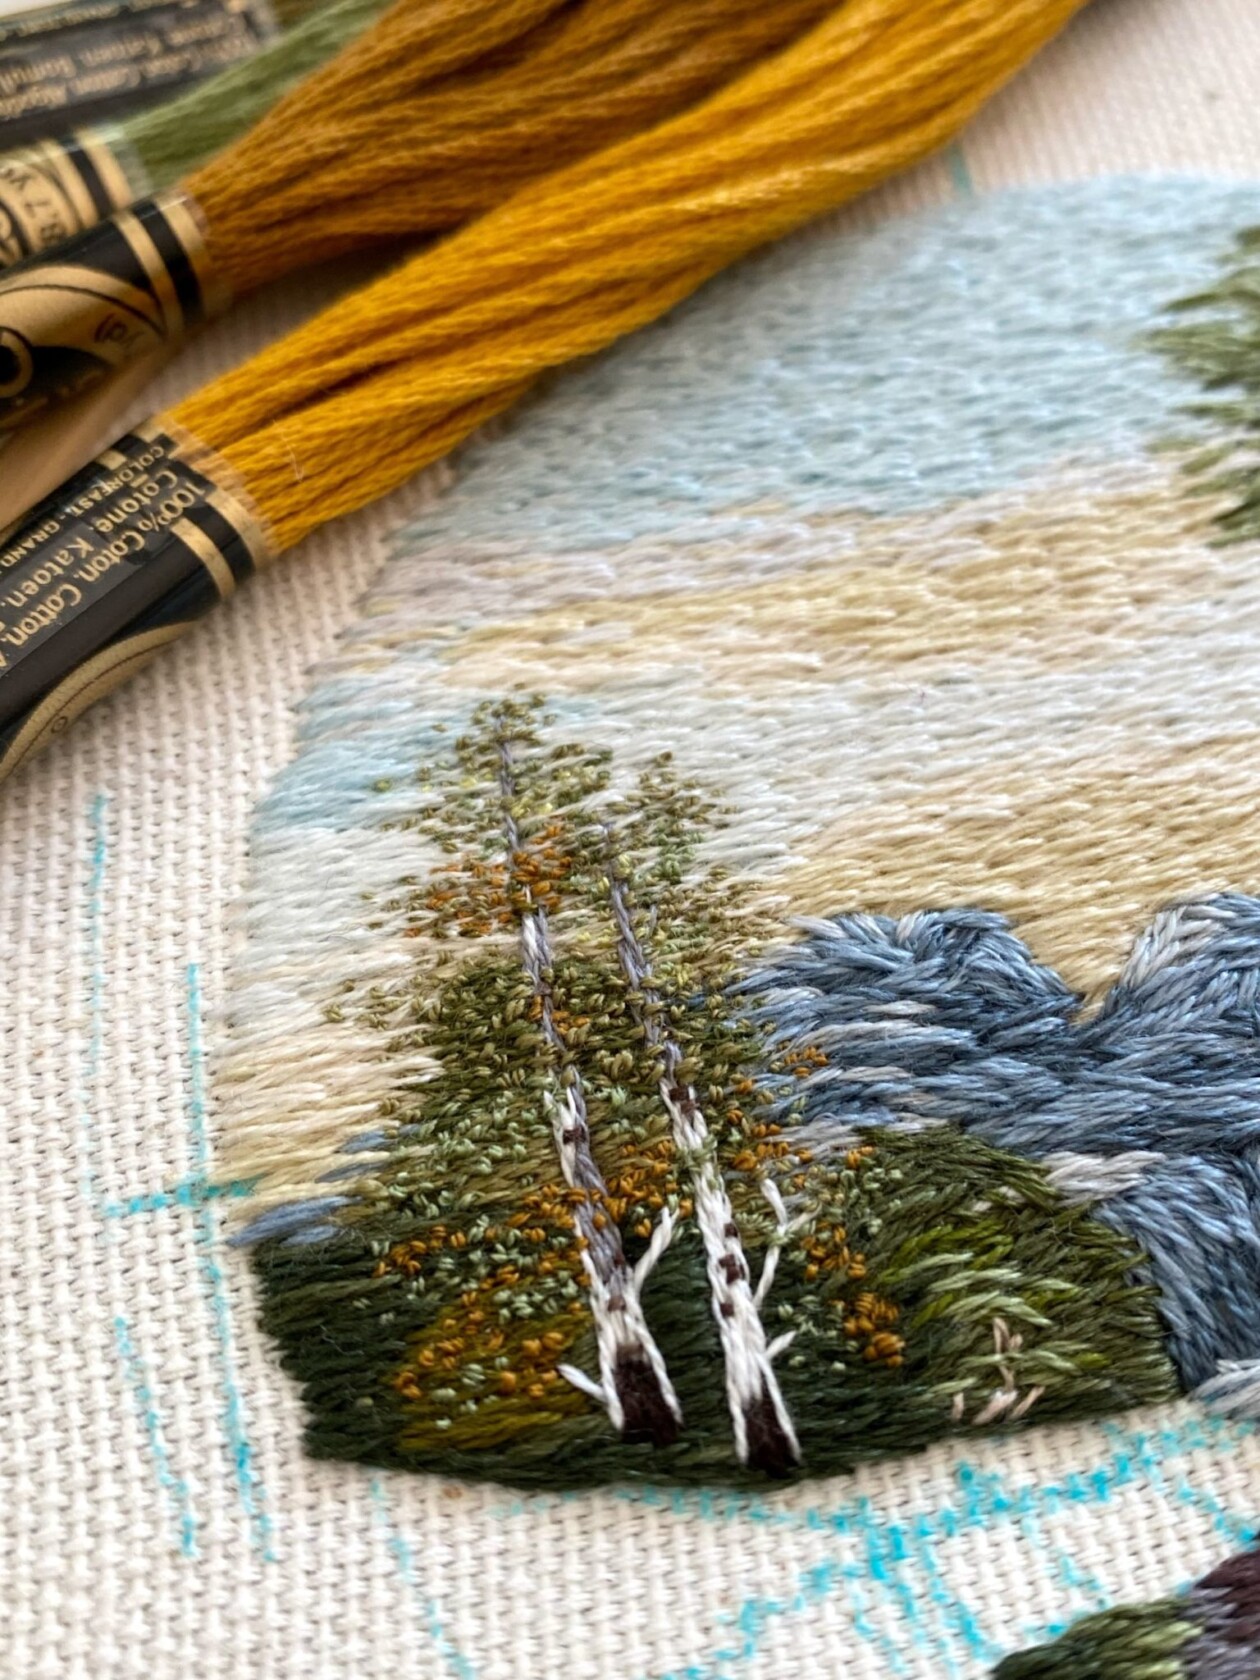 Wonderful Impressionistic Landscape Embroideries By Cassandra Dias (8)